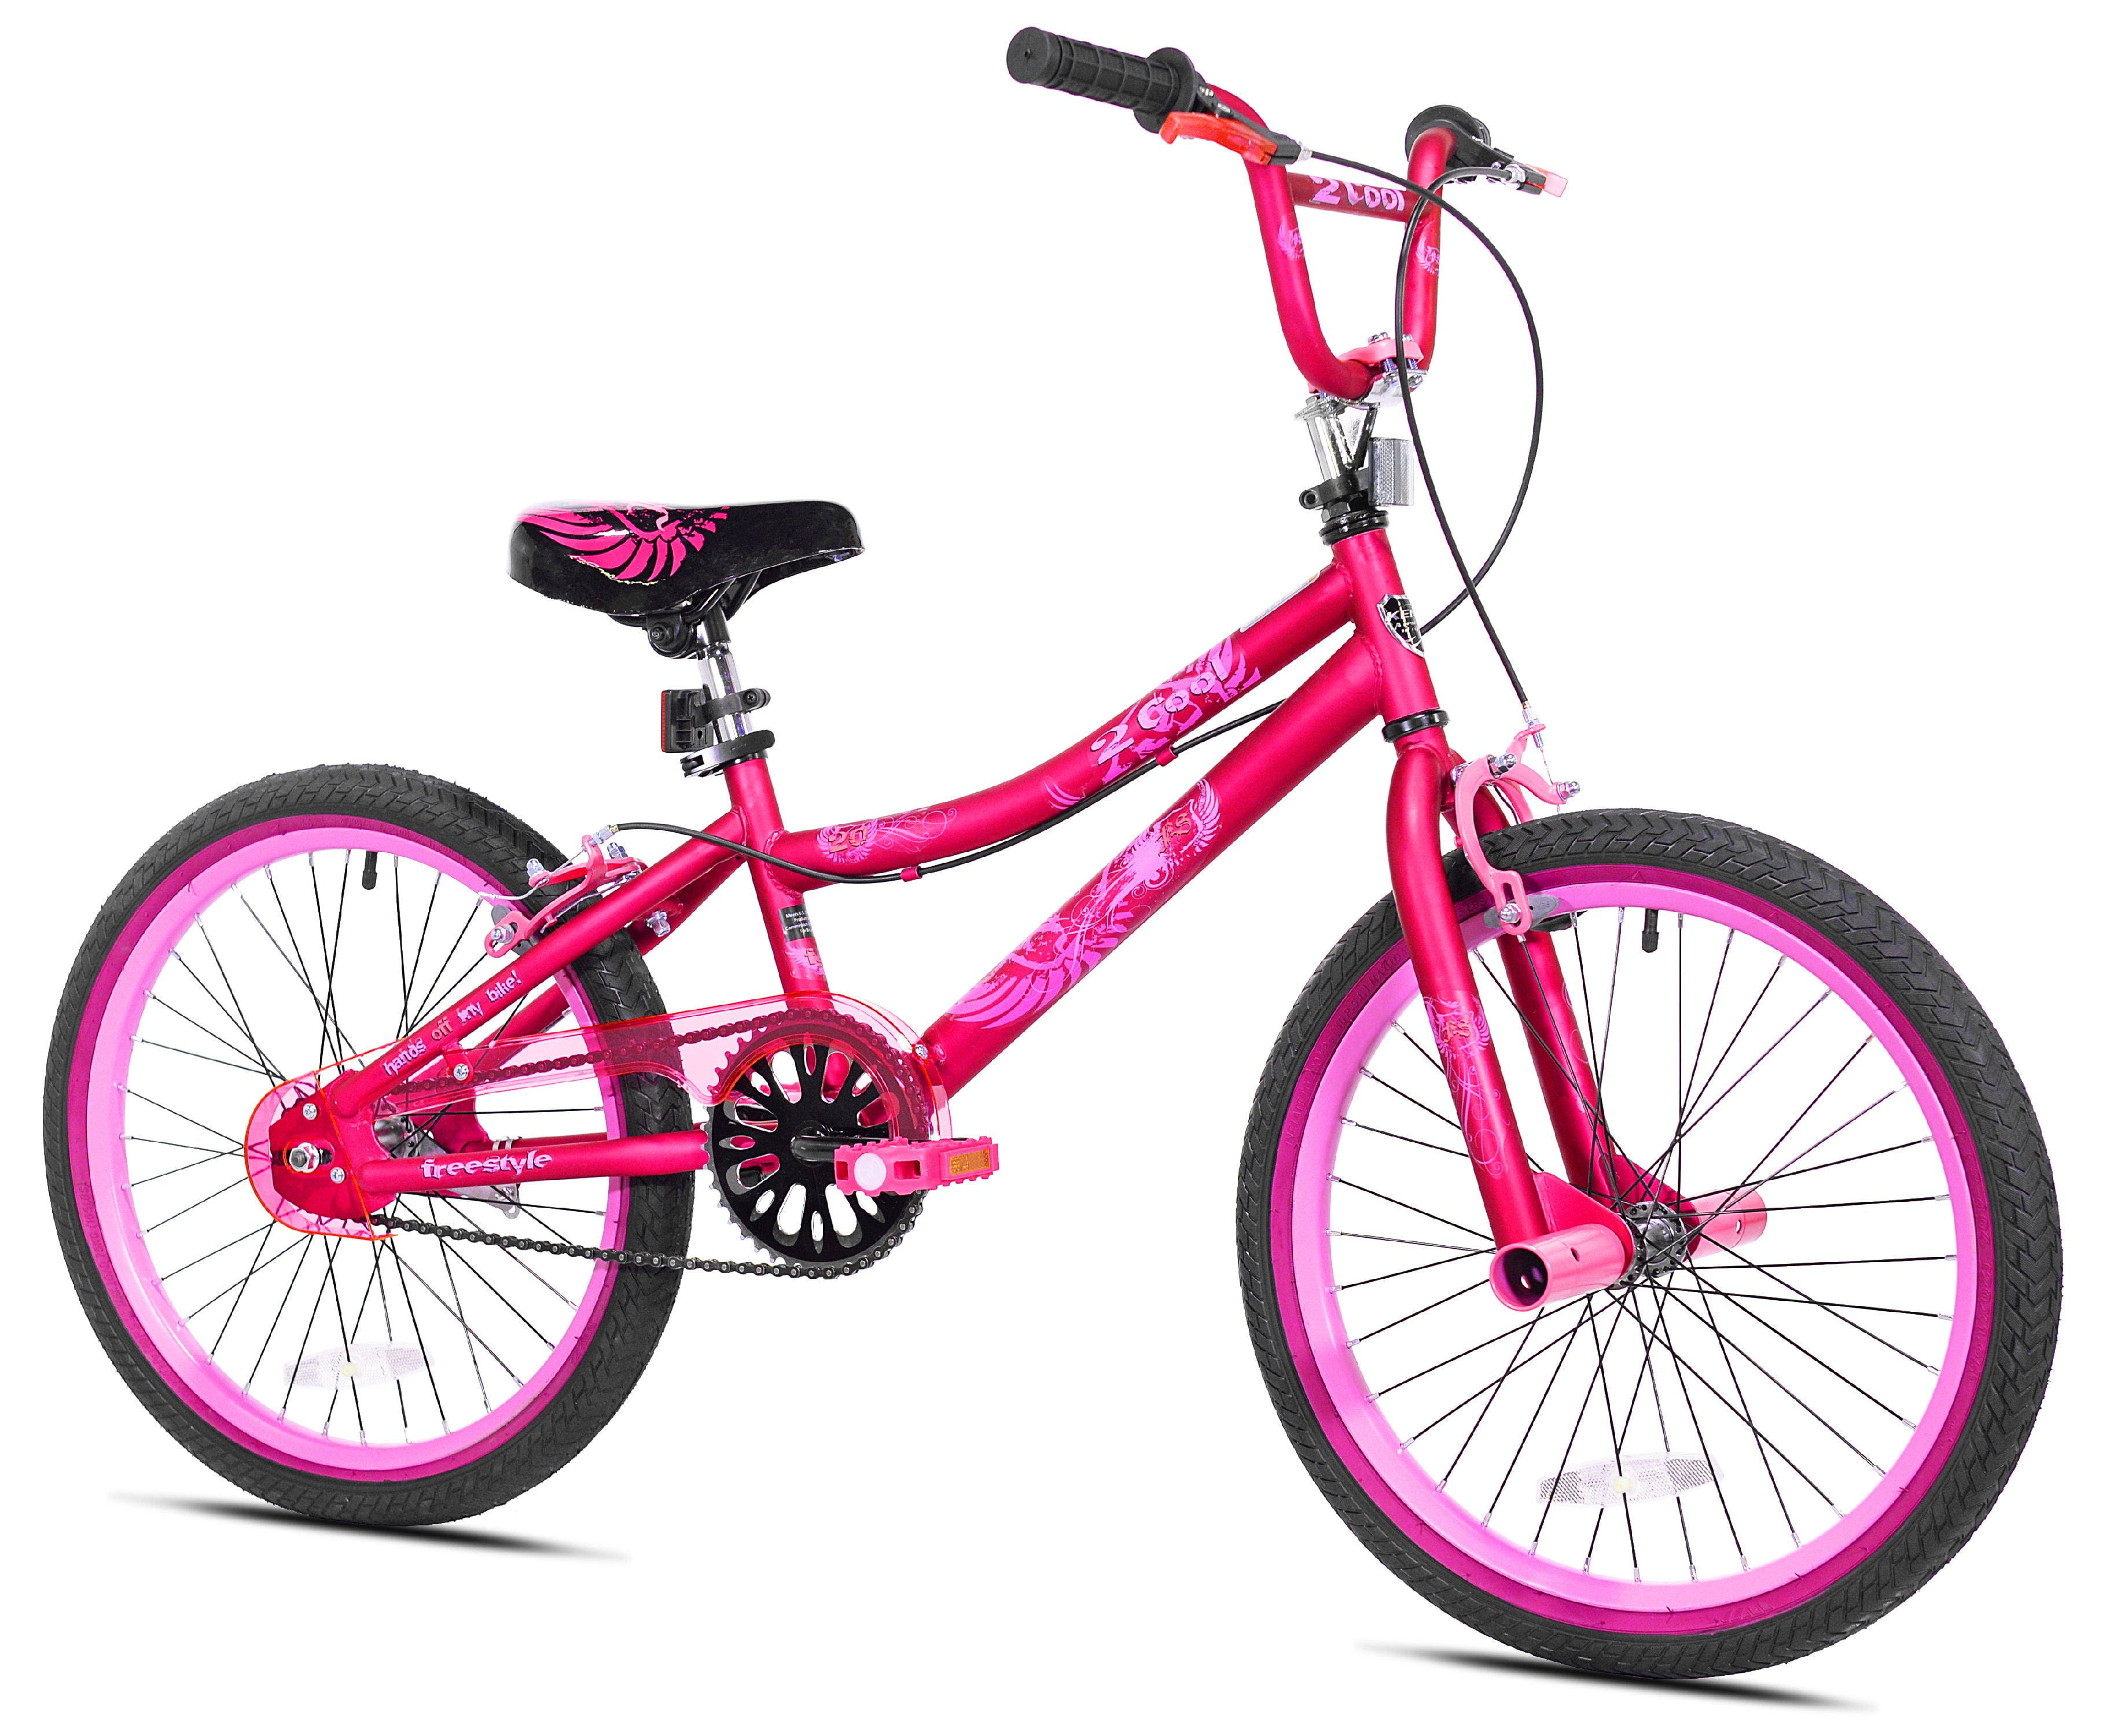 kent-20-2-cool-bmx-girl-s-bike-pink-walmart-walmart